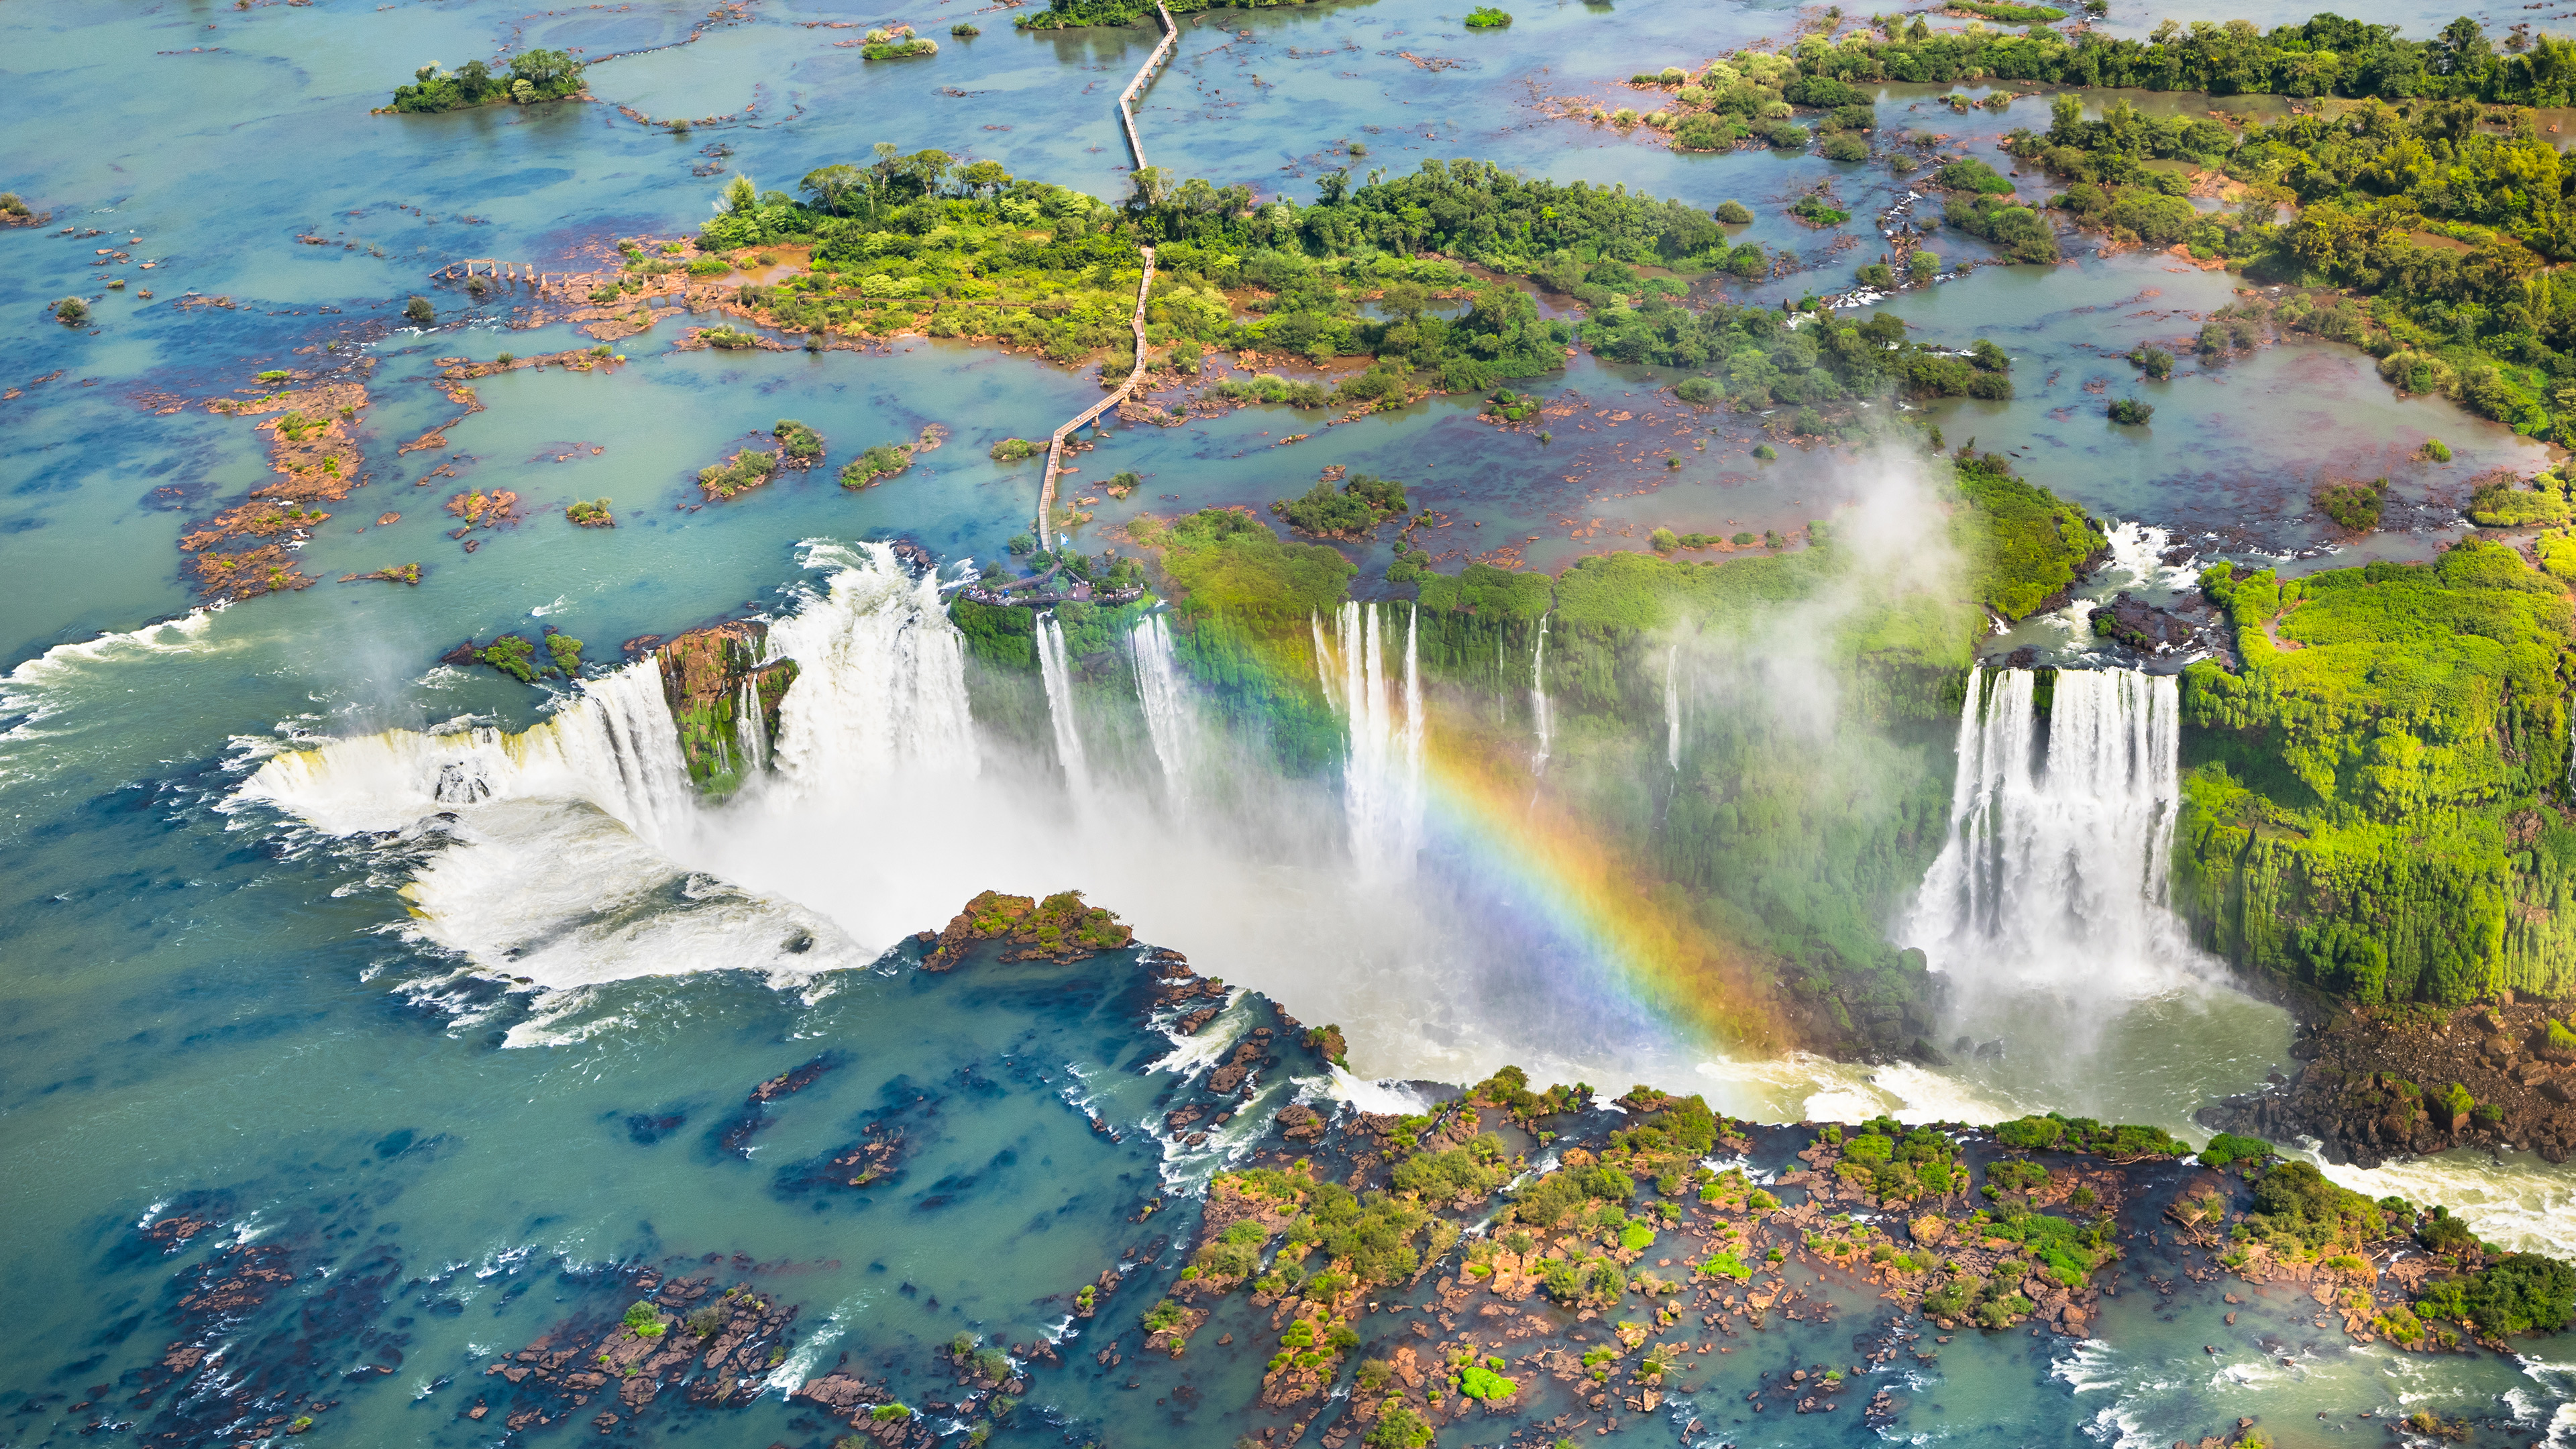 IguazuFalls_ROW3343684641_UHD.jpg